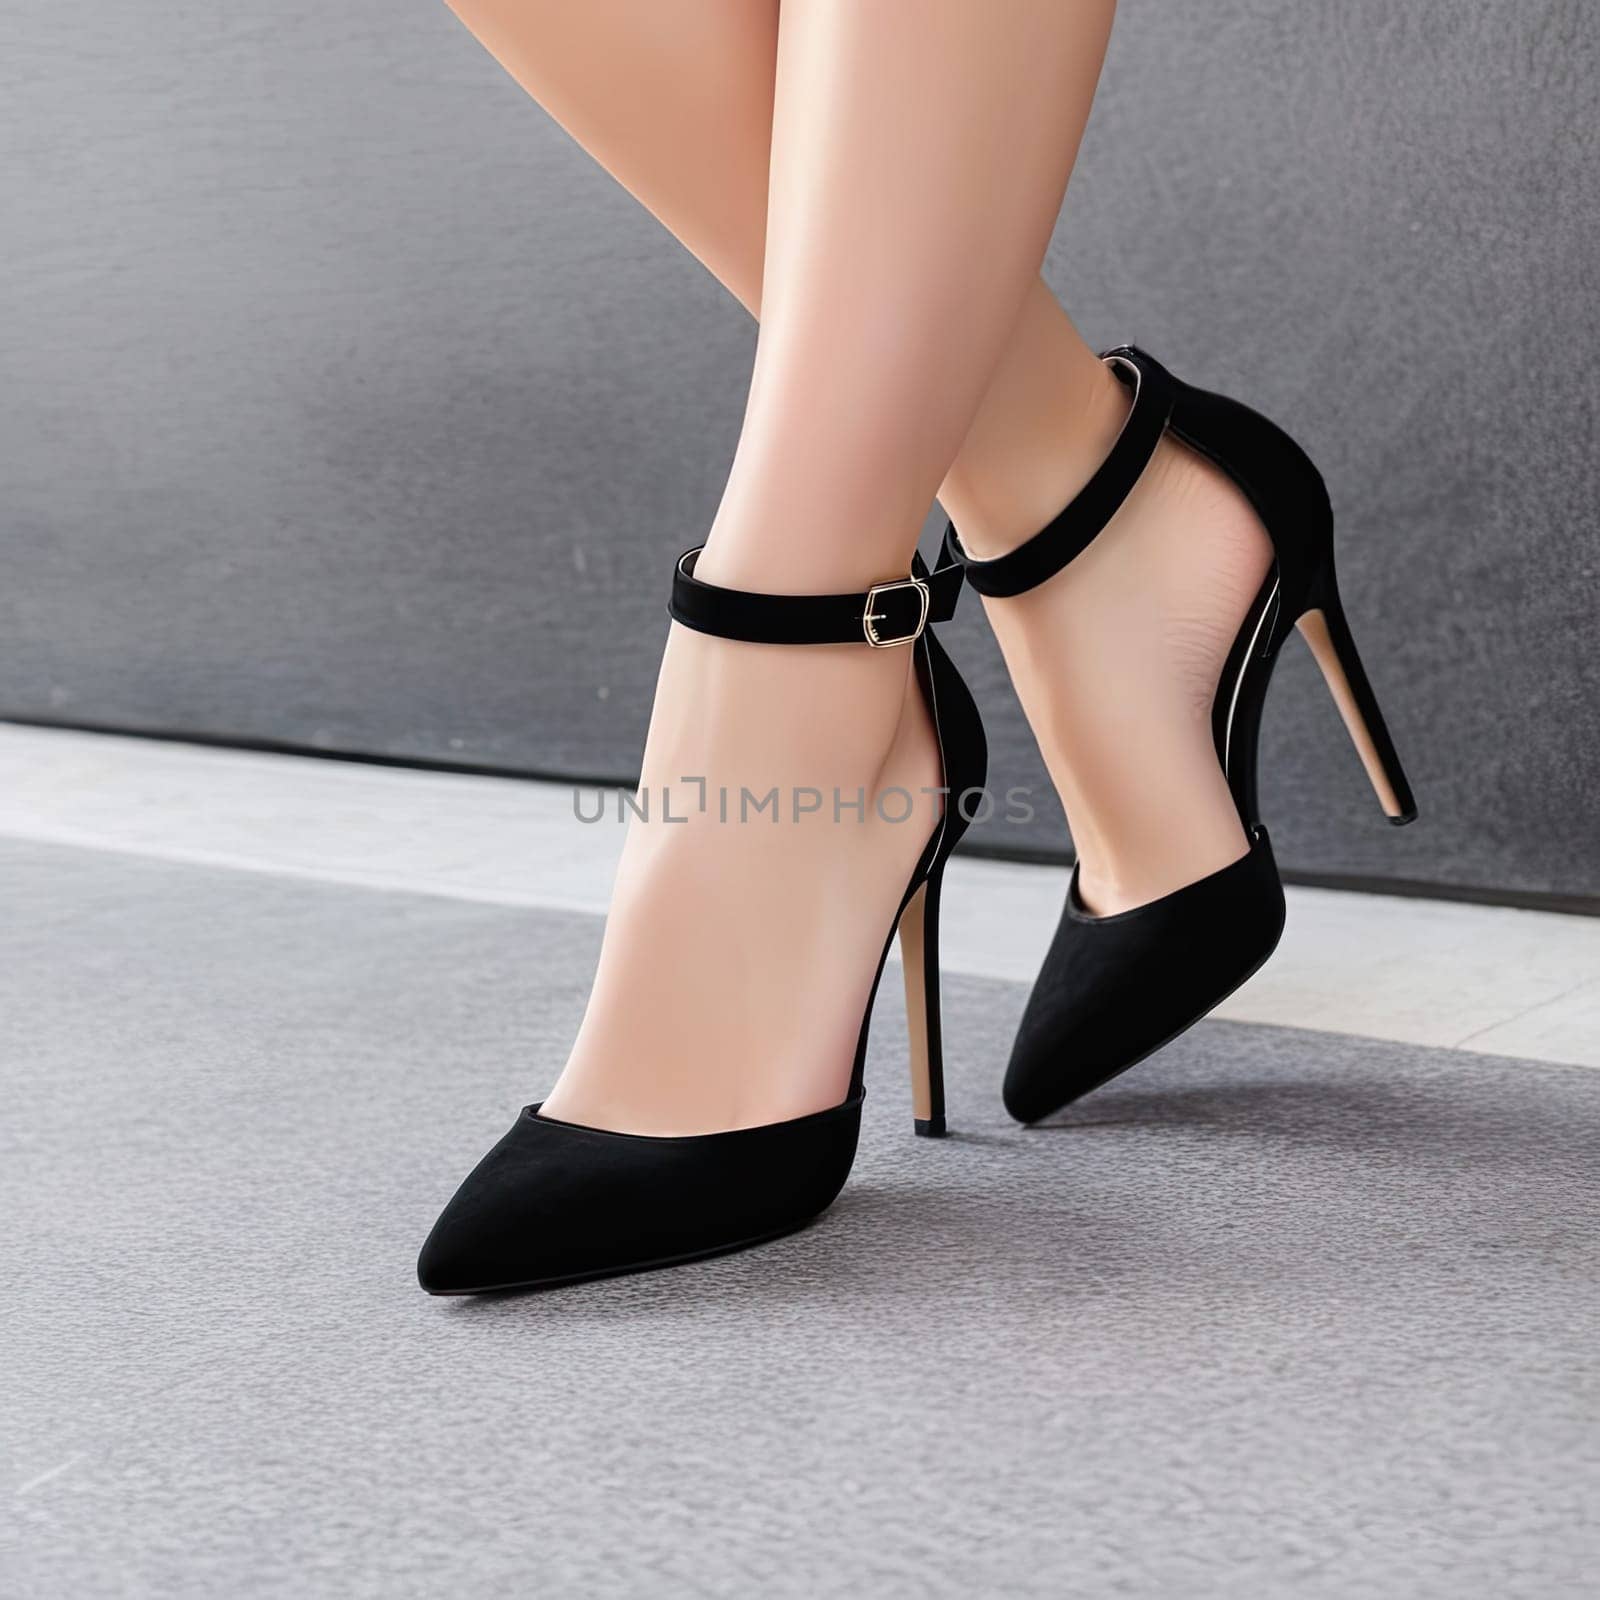 Beautiful legs in black high heels by Ladouski